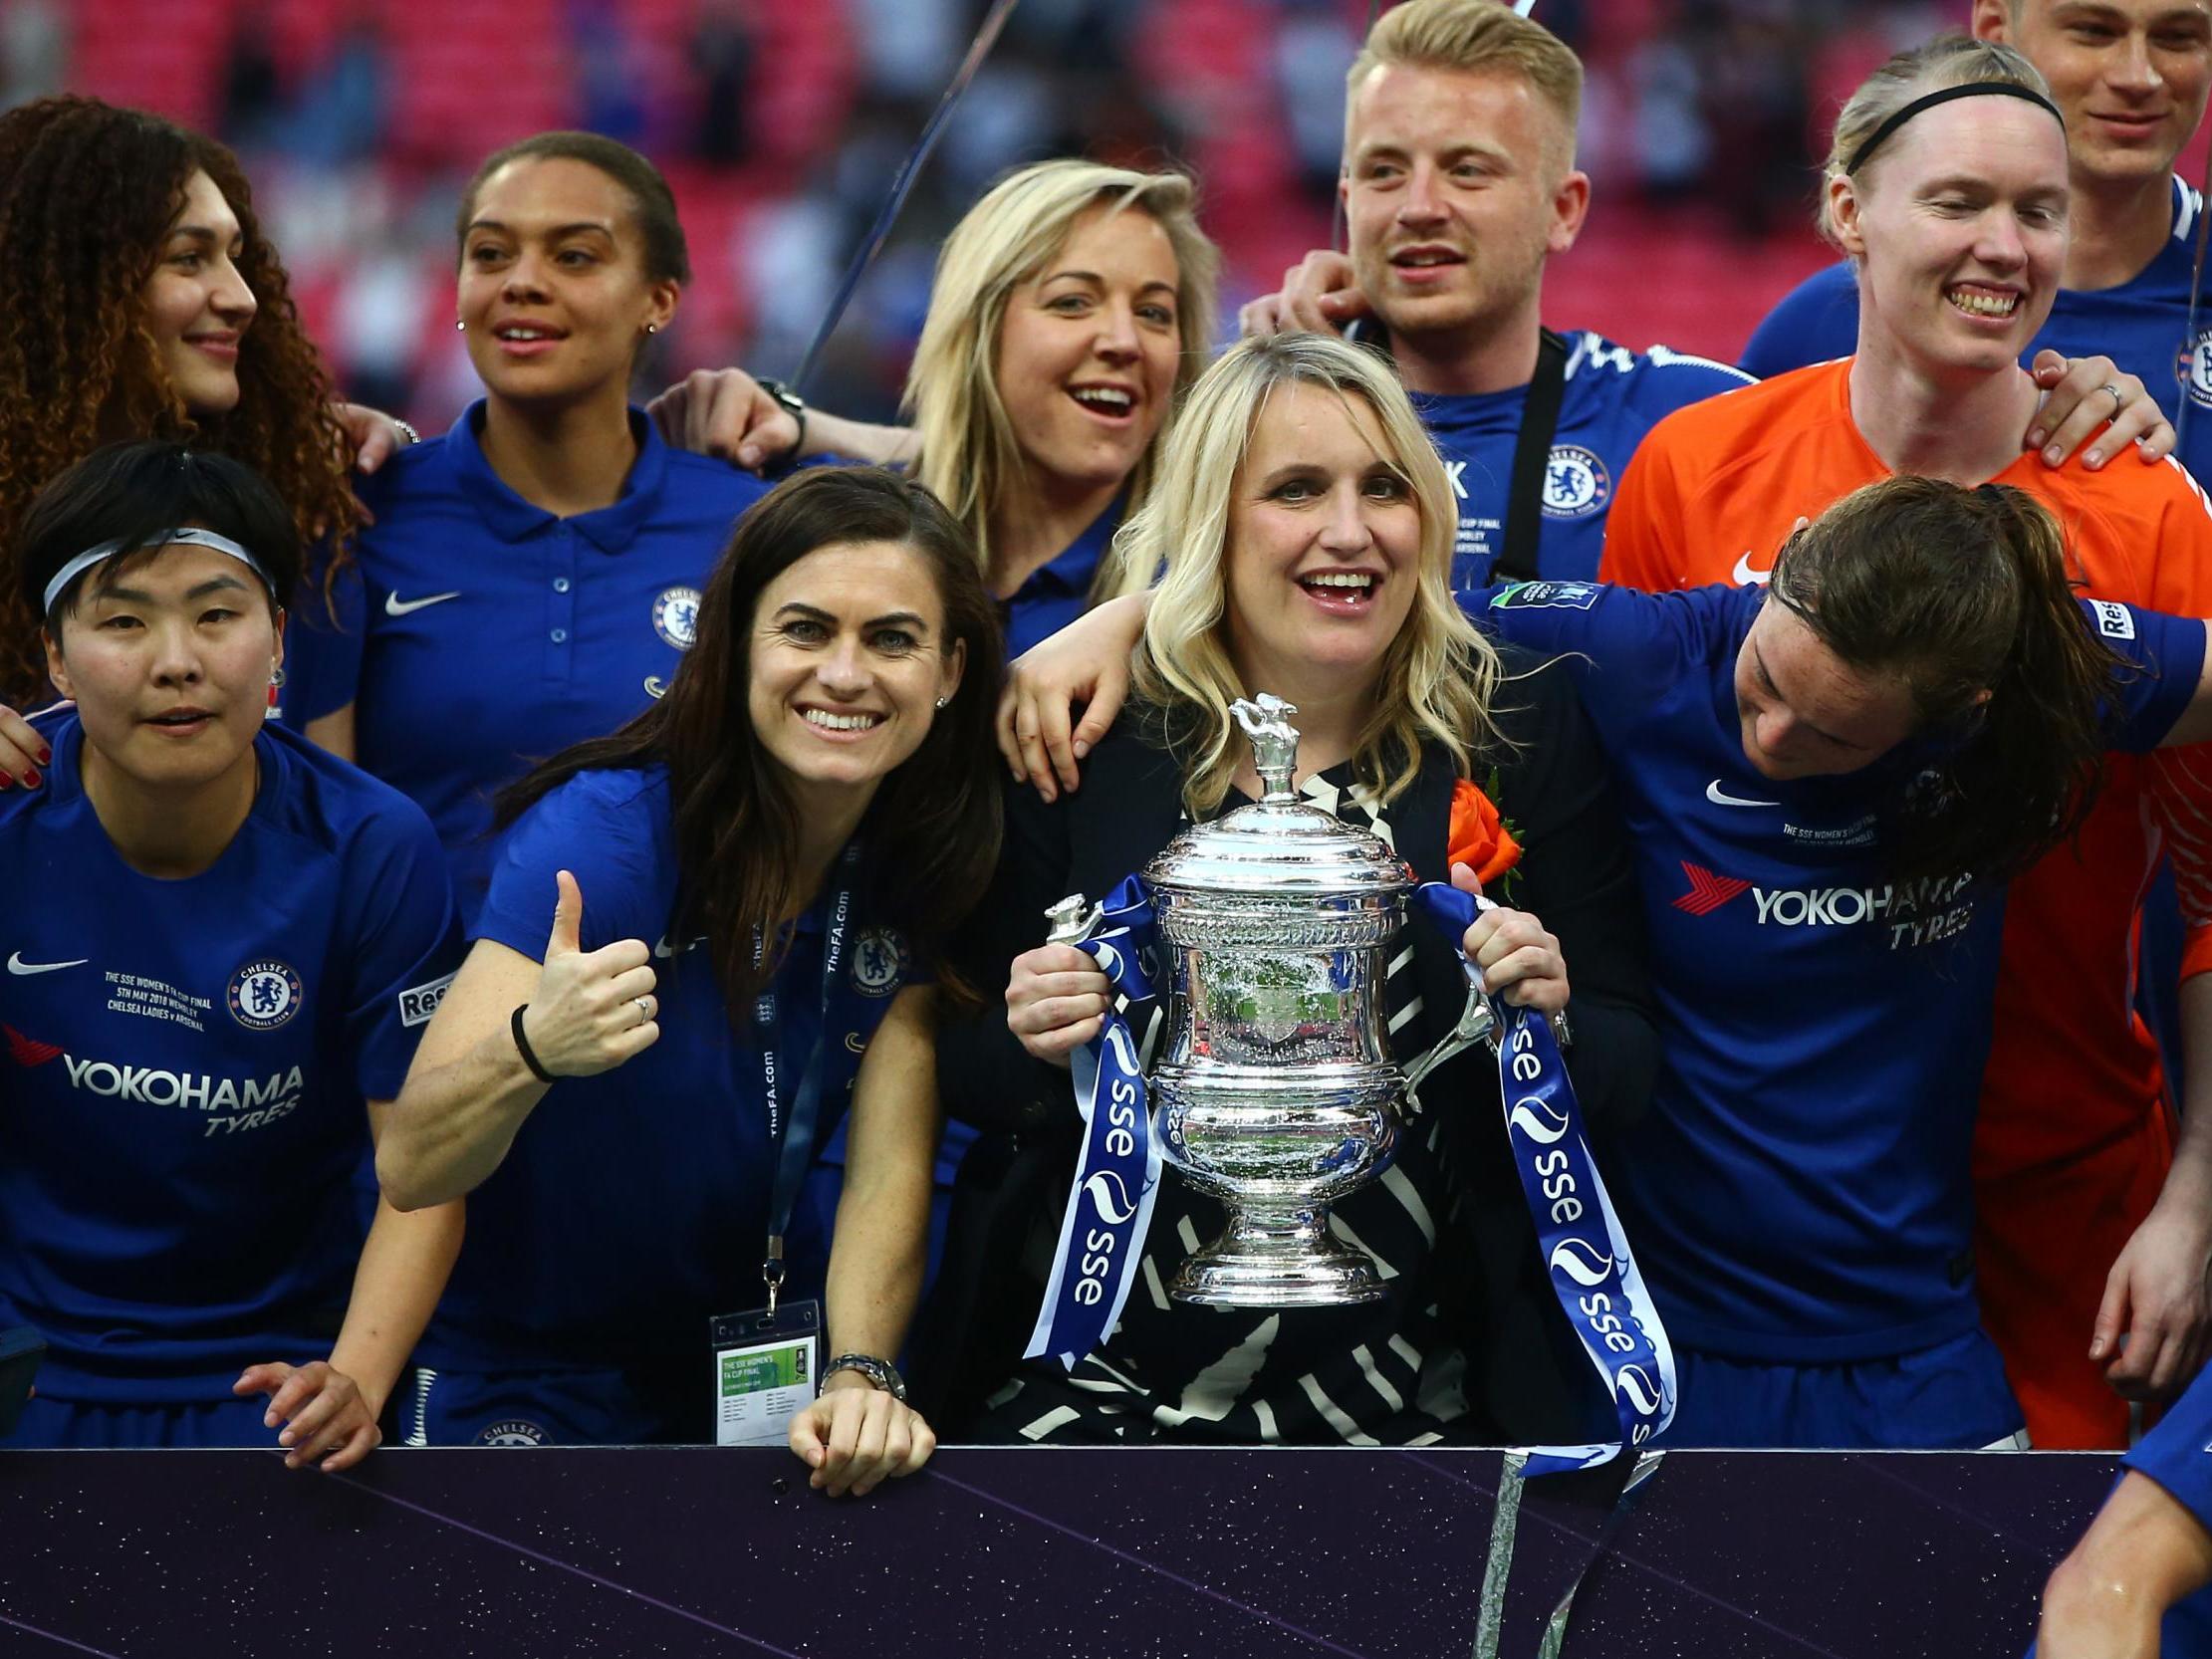 Chelsea also won the FA Women's Cup last season